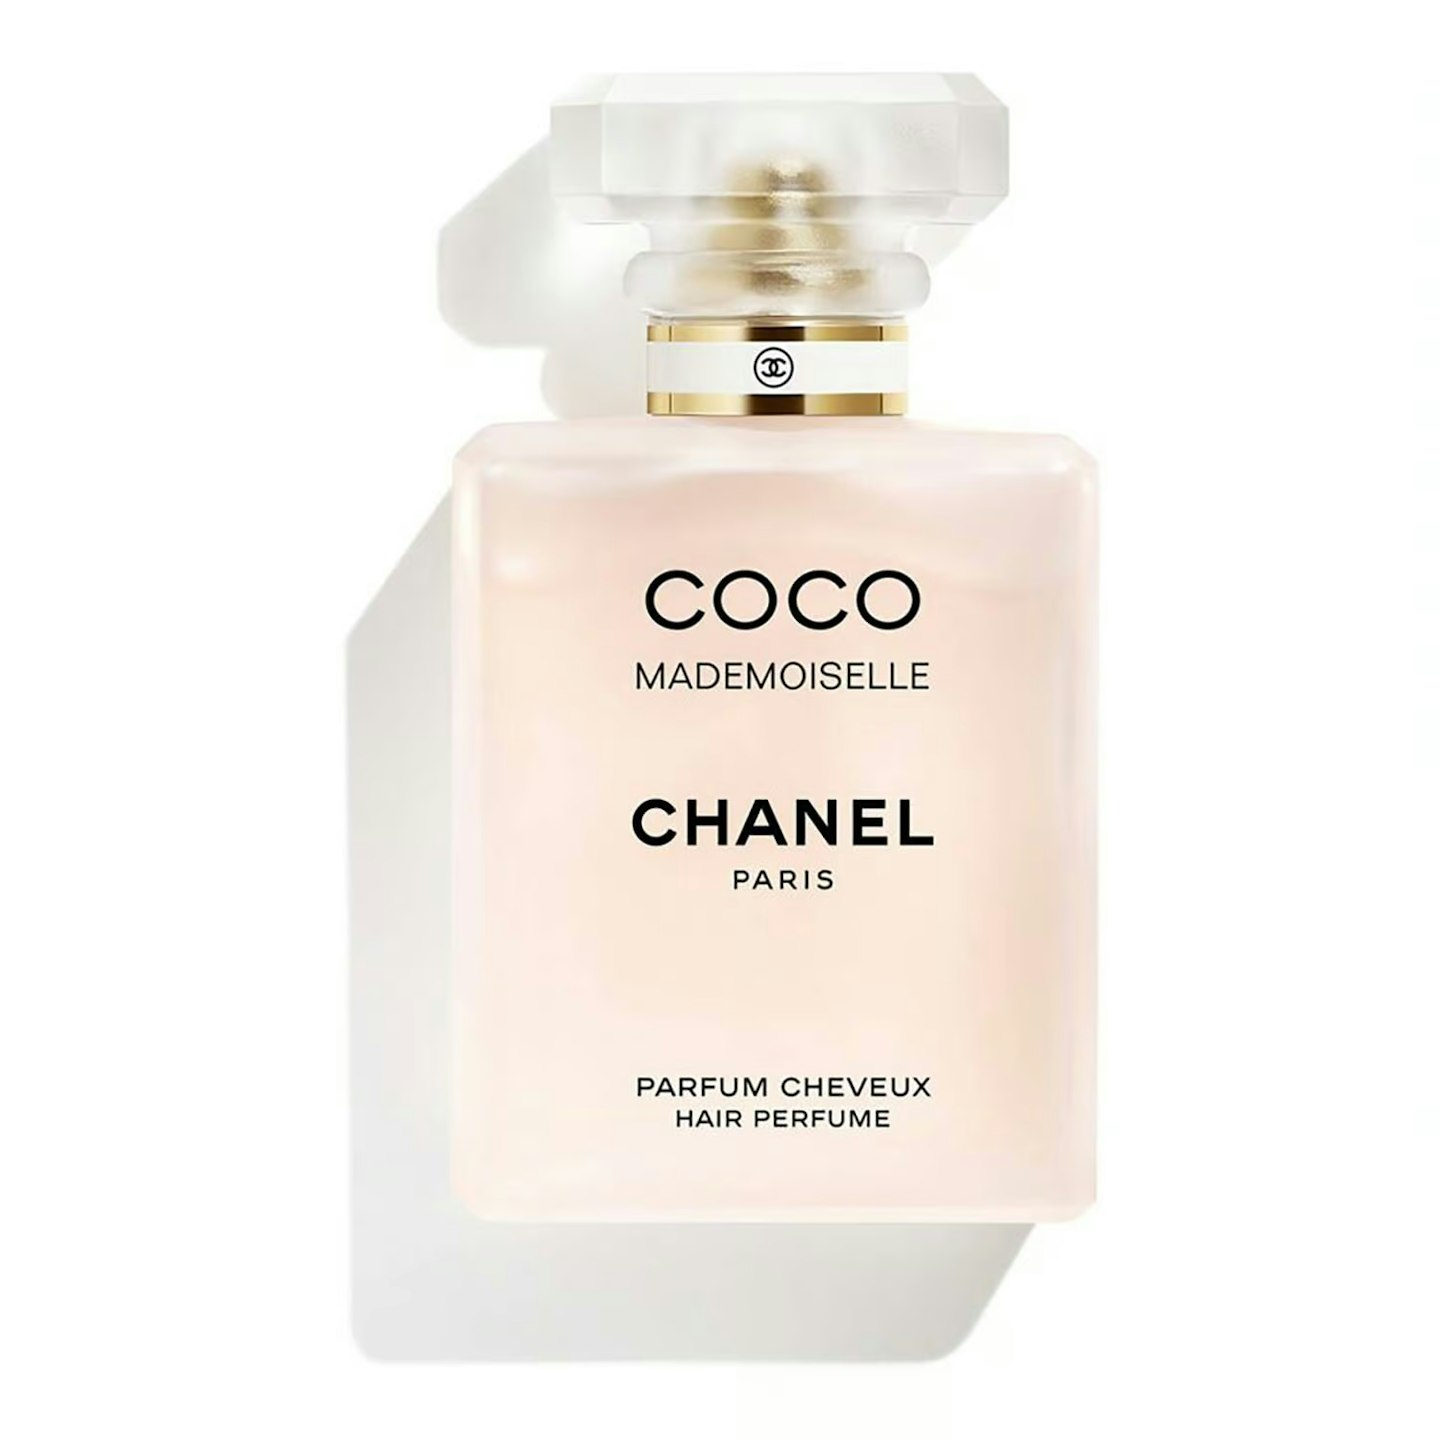 Chanel Coco Noir Fragrances - Perfumes, Colognes, Parfums, Scents